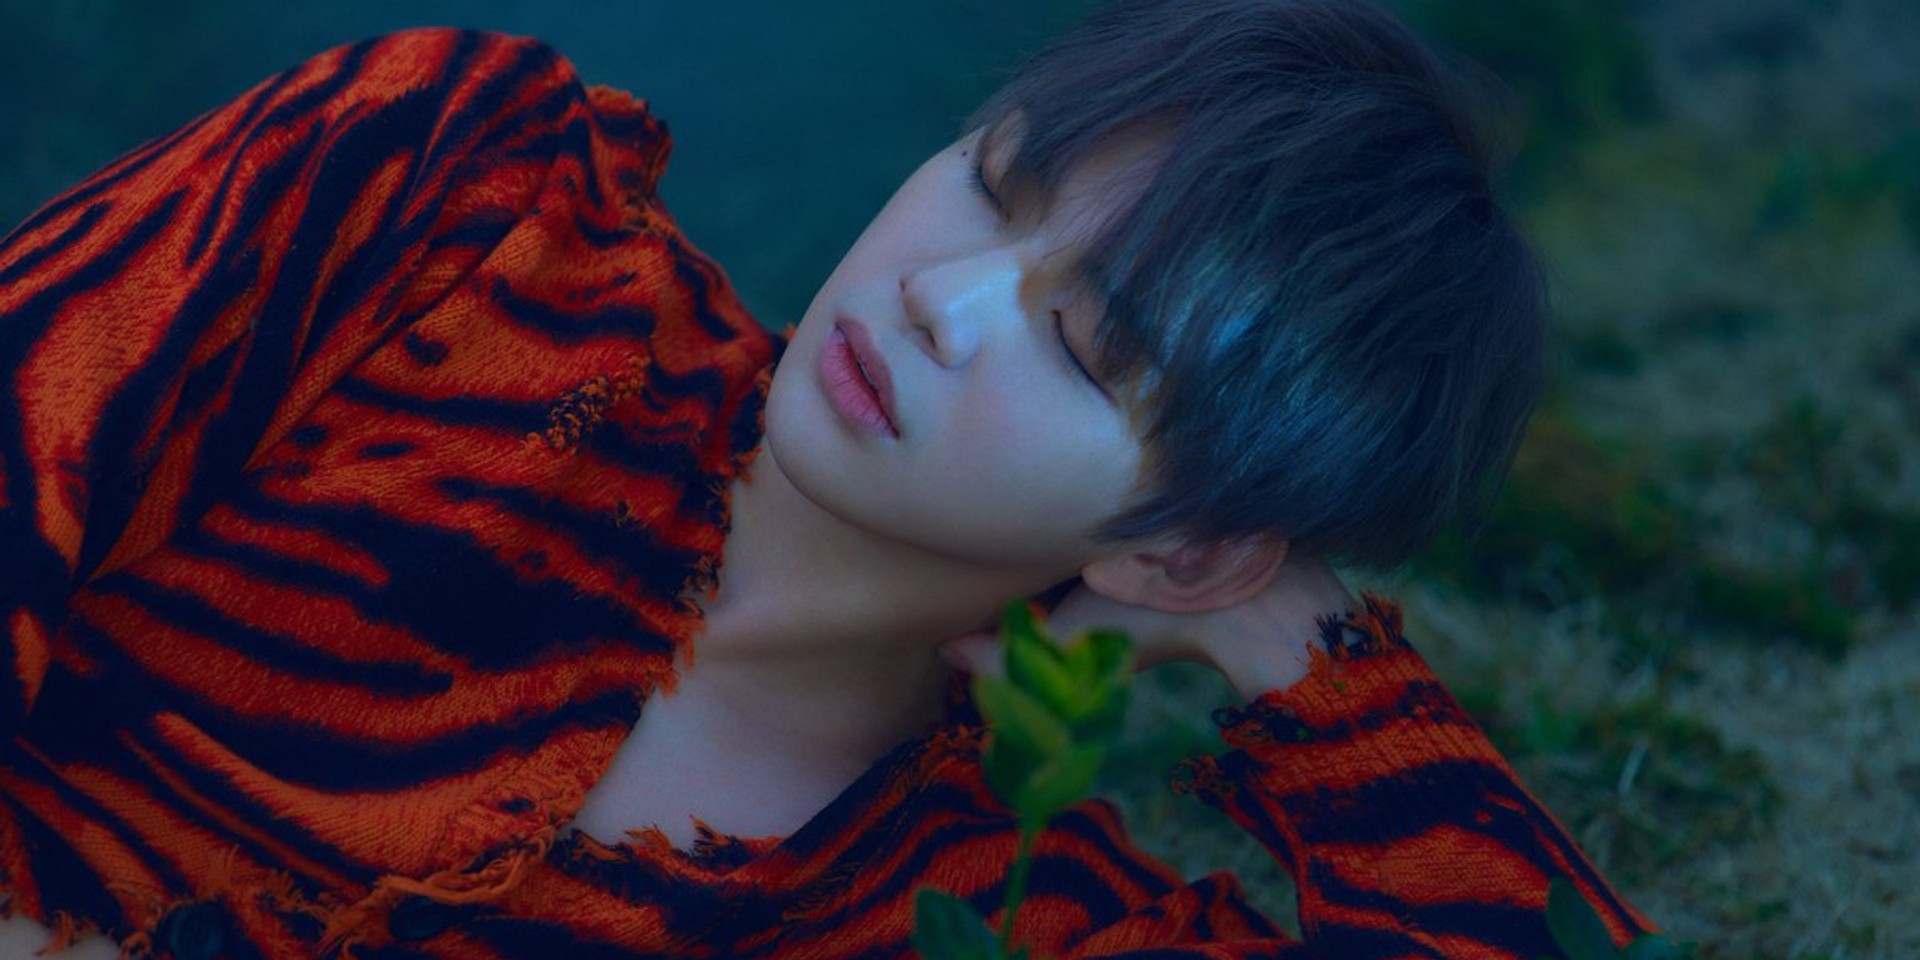 Kang Daniel releases third mini-album, 'YELLOW' – listen